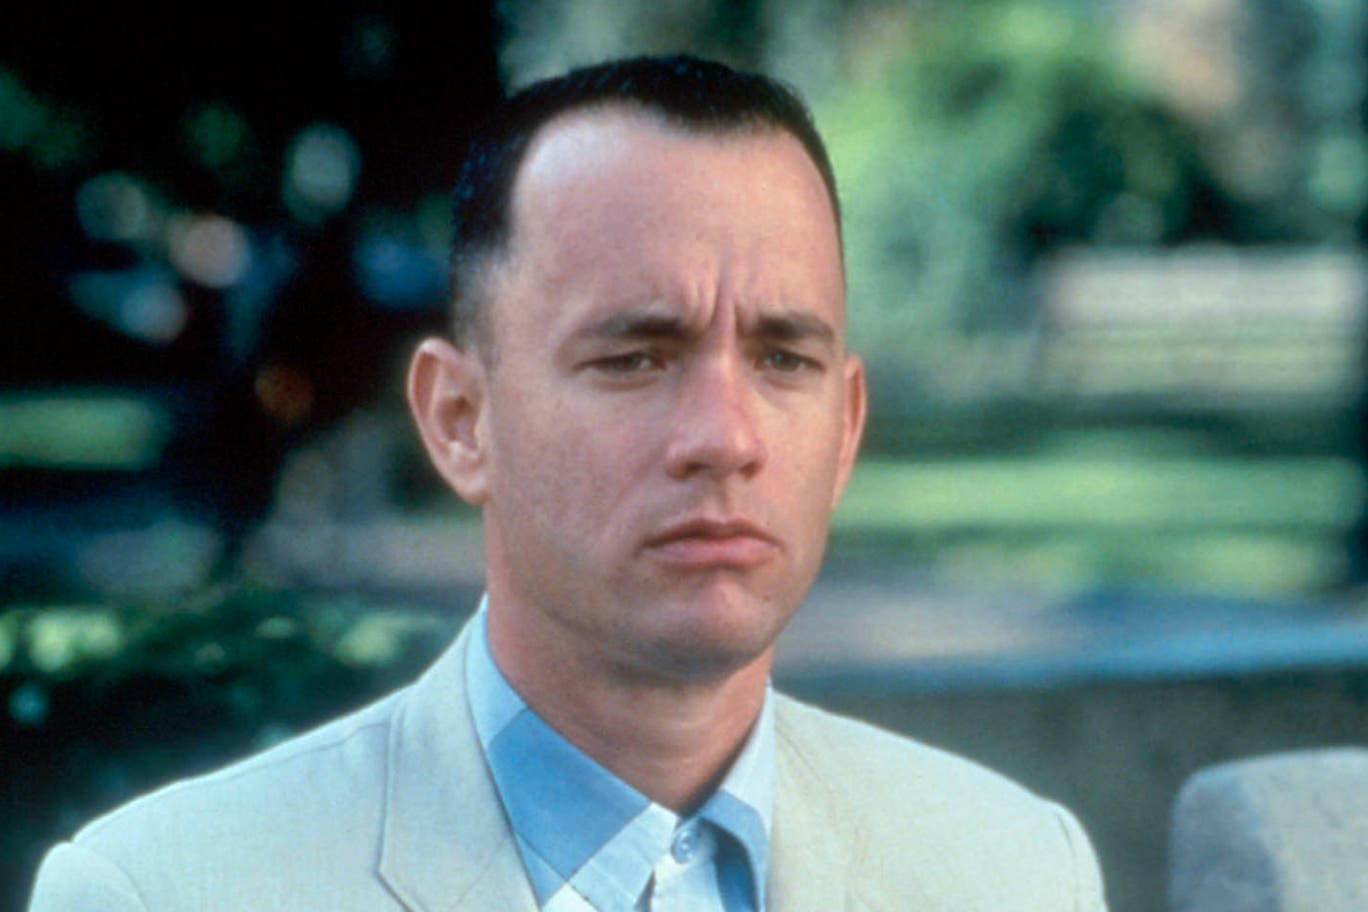 Leave Forrest Gump alone – Tom Hanks's Oscar-winning charmer doesn't deserve the stigma